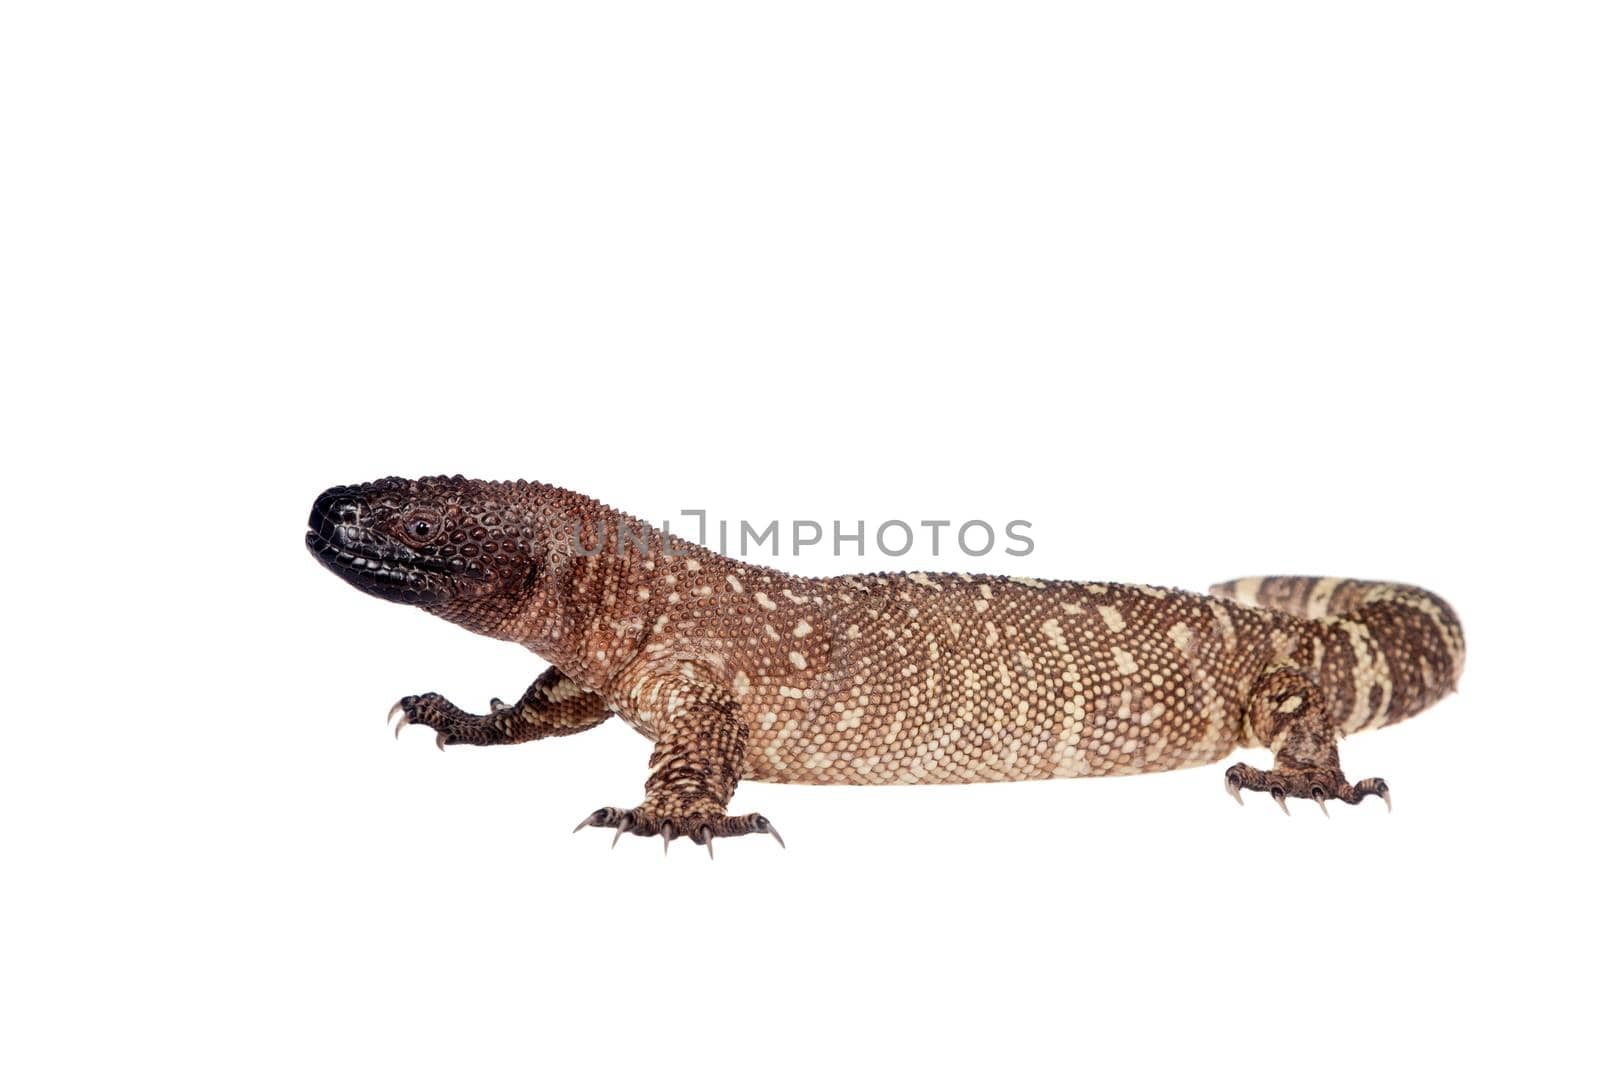 Venomous Beaded lizard, Heloderma horridum, isolated on white background